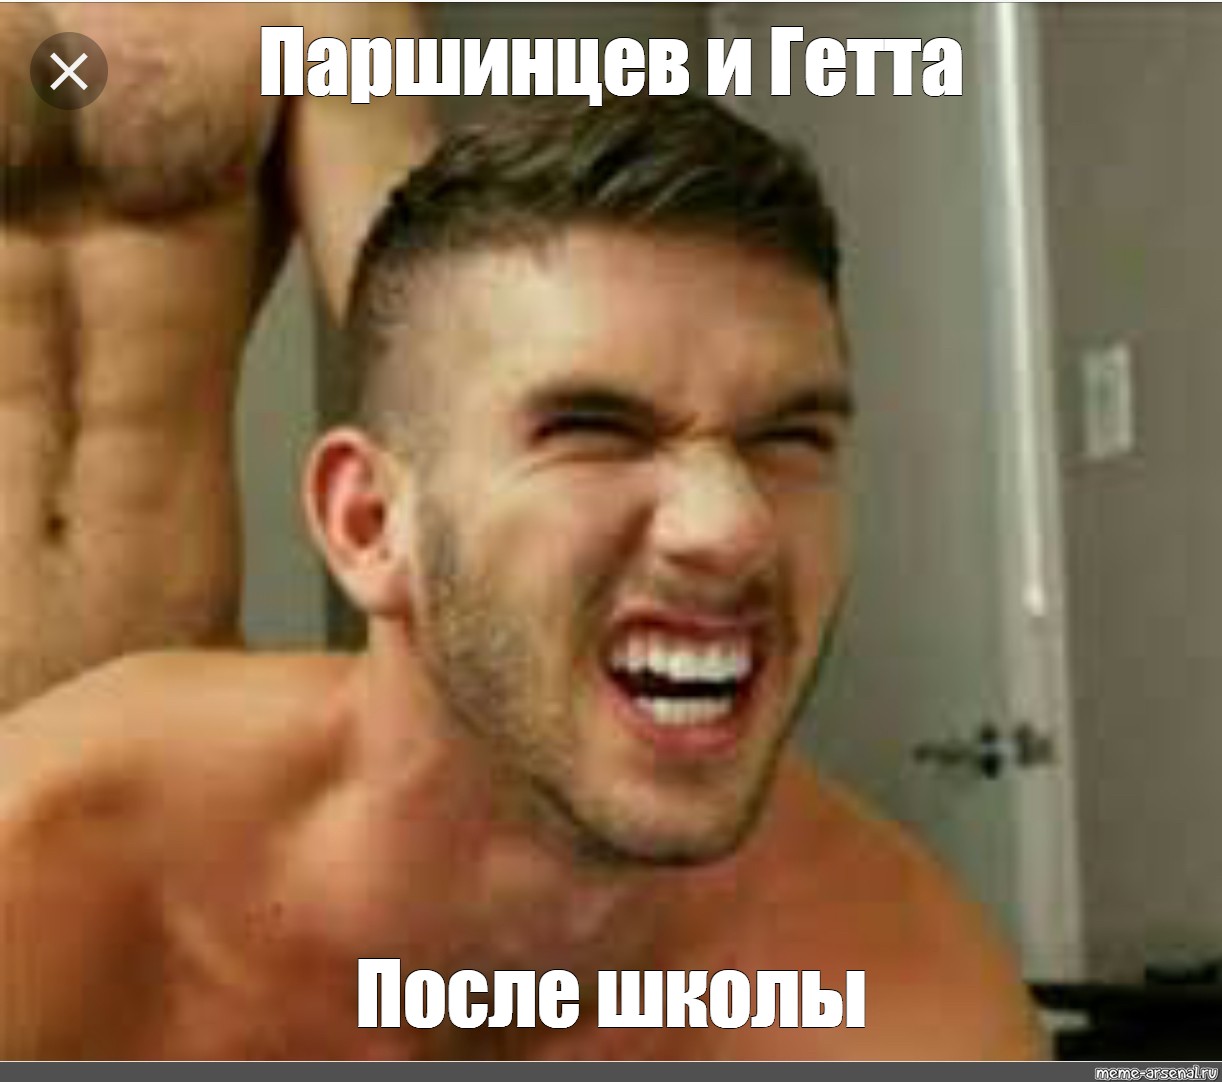 песни про геев на русском фото 20